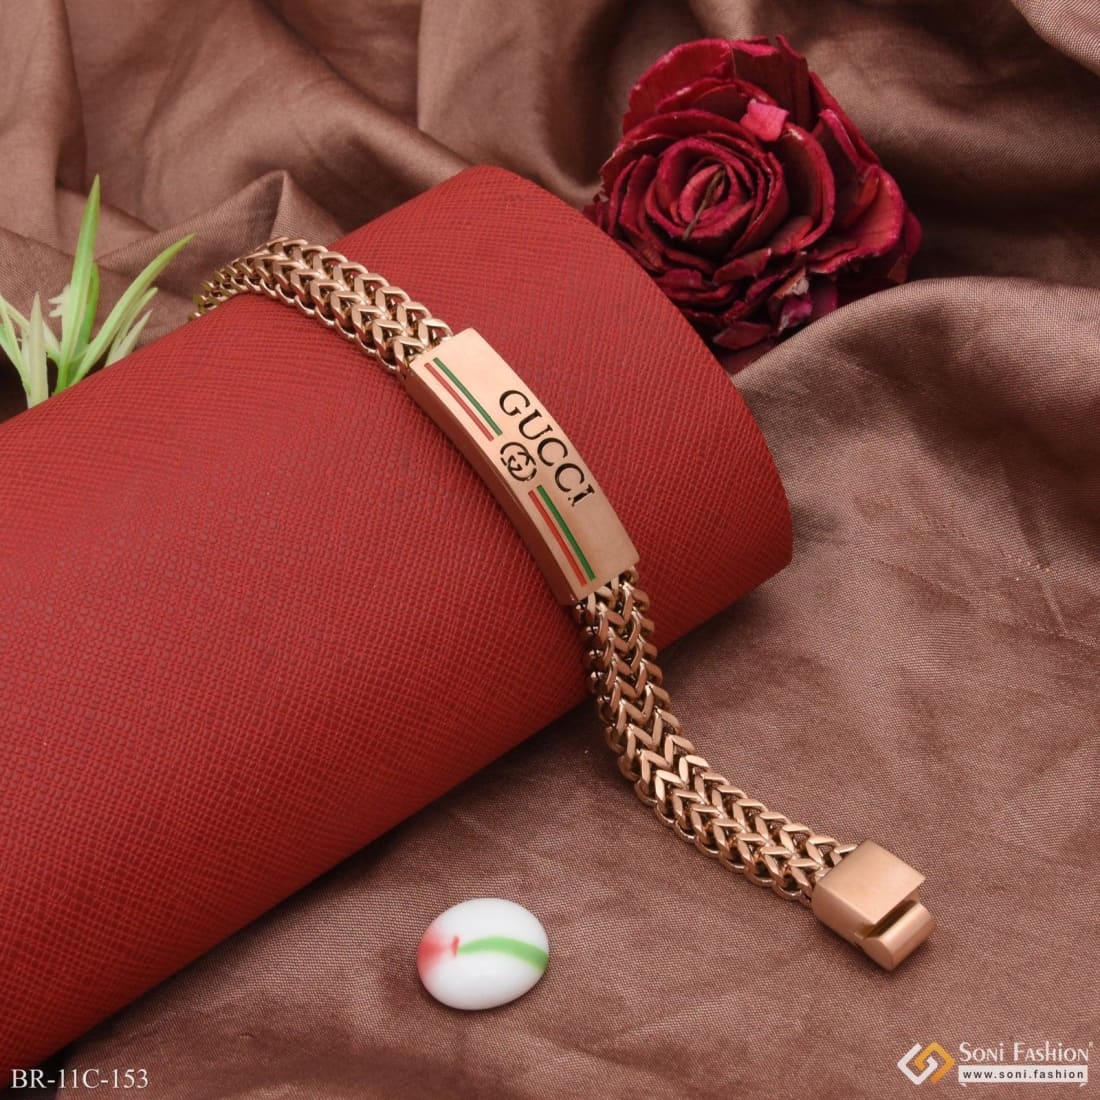 Amazon.com: Flyingeagle Trade® Roman Numeral Stainless Steel Bangle  Bracelet Men Women Unisex (Rose Gold): Clothing, Shoes & Jewelry